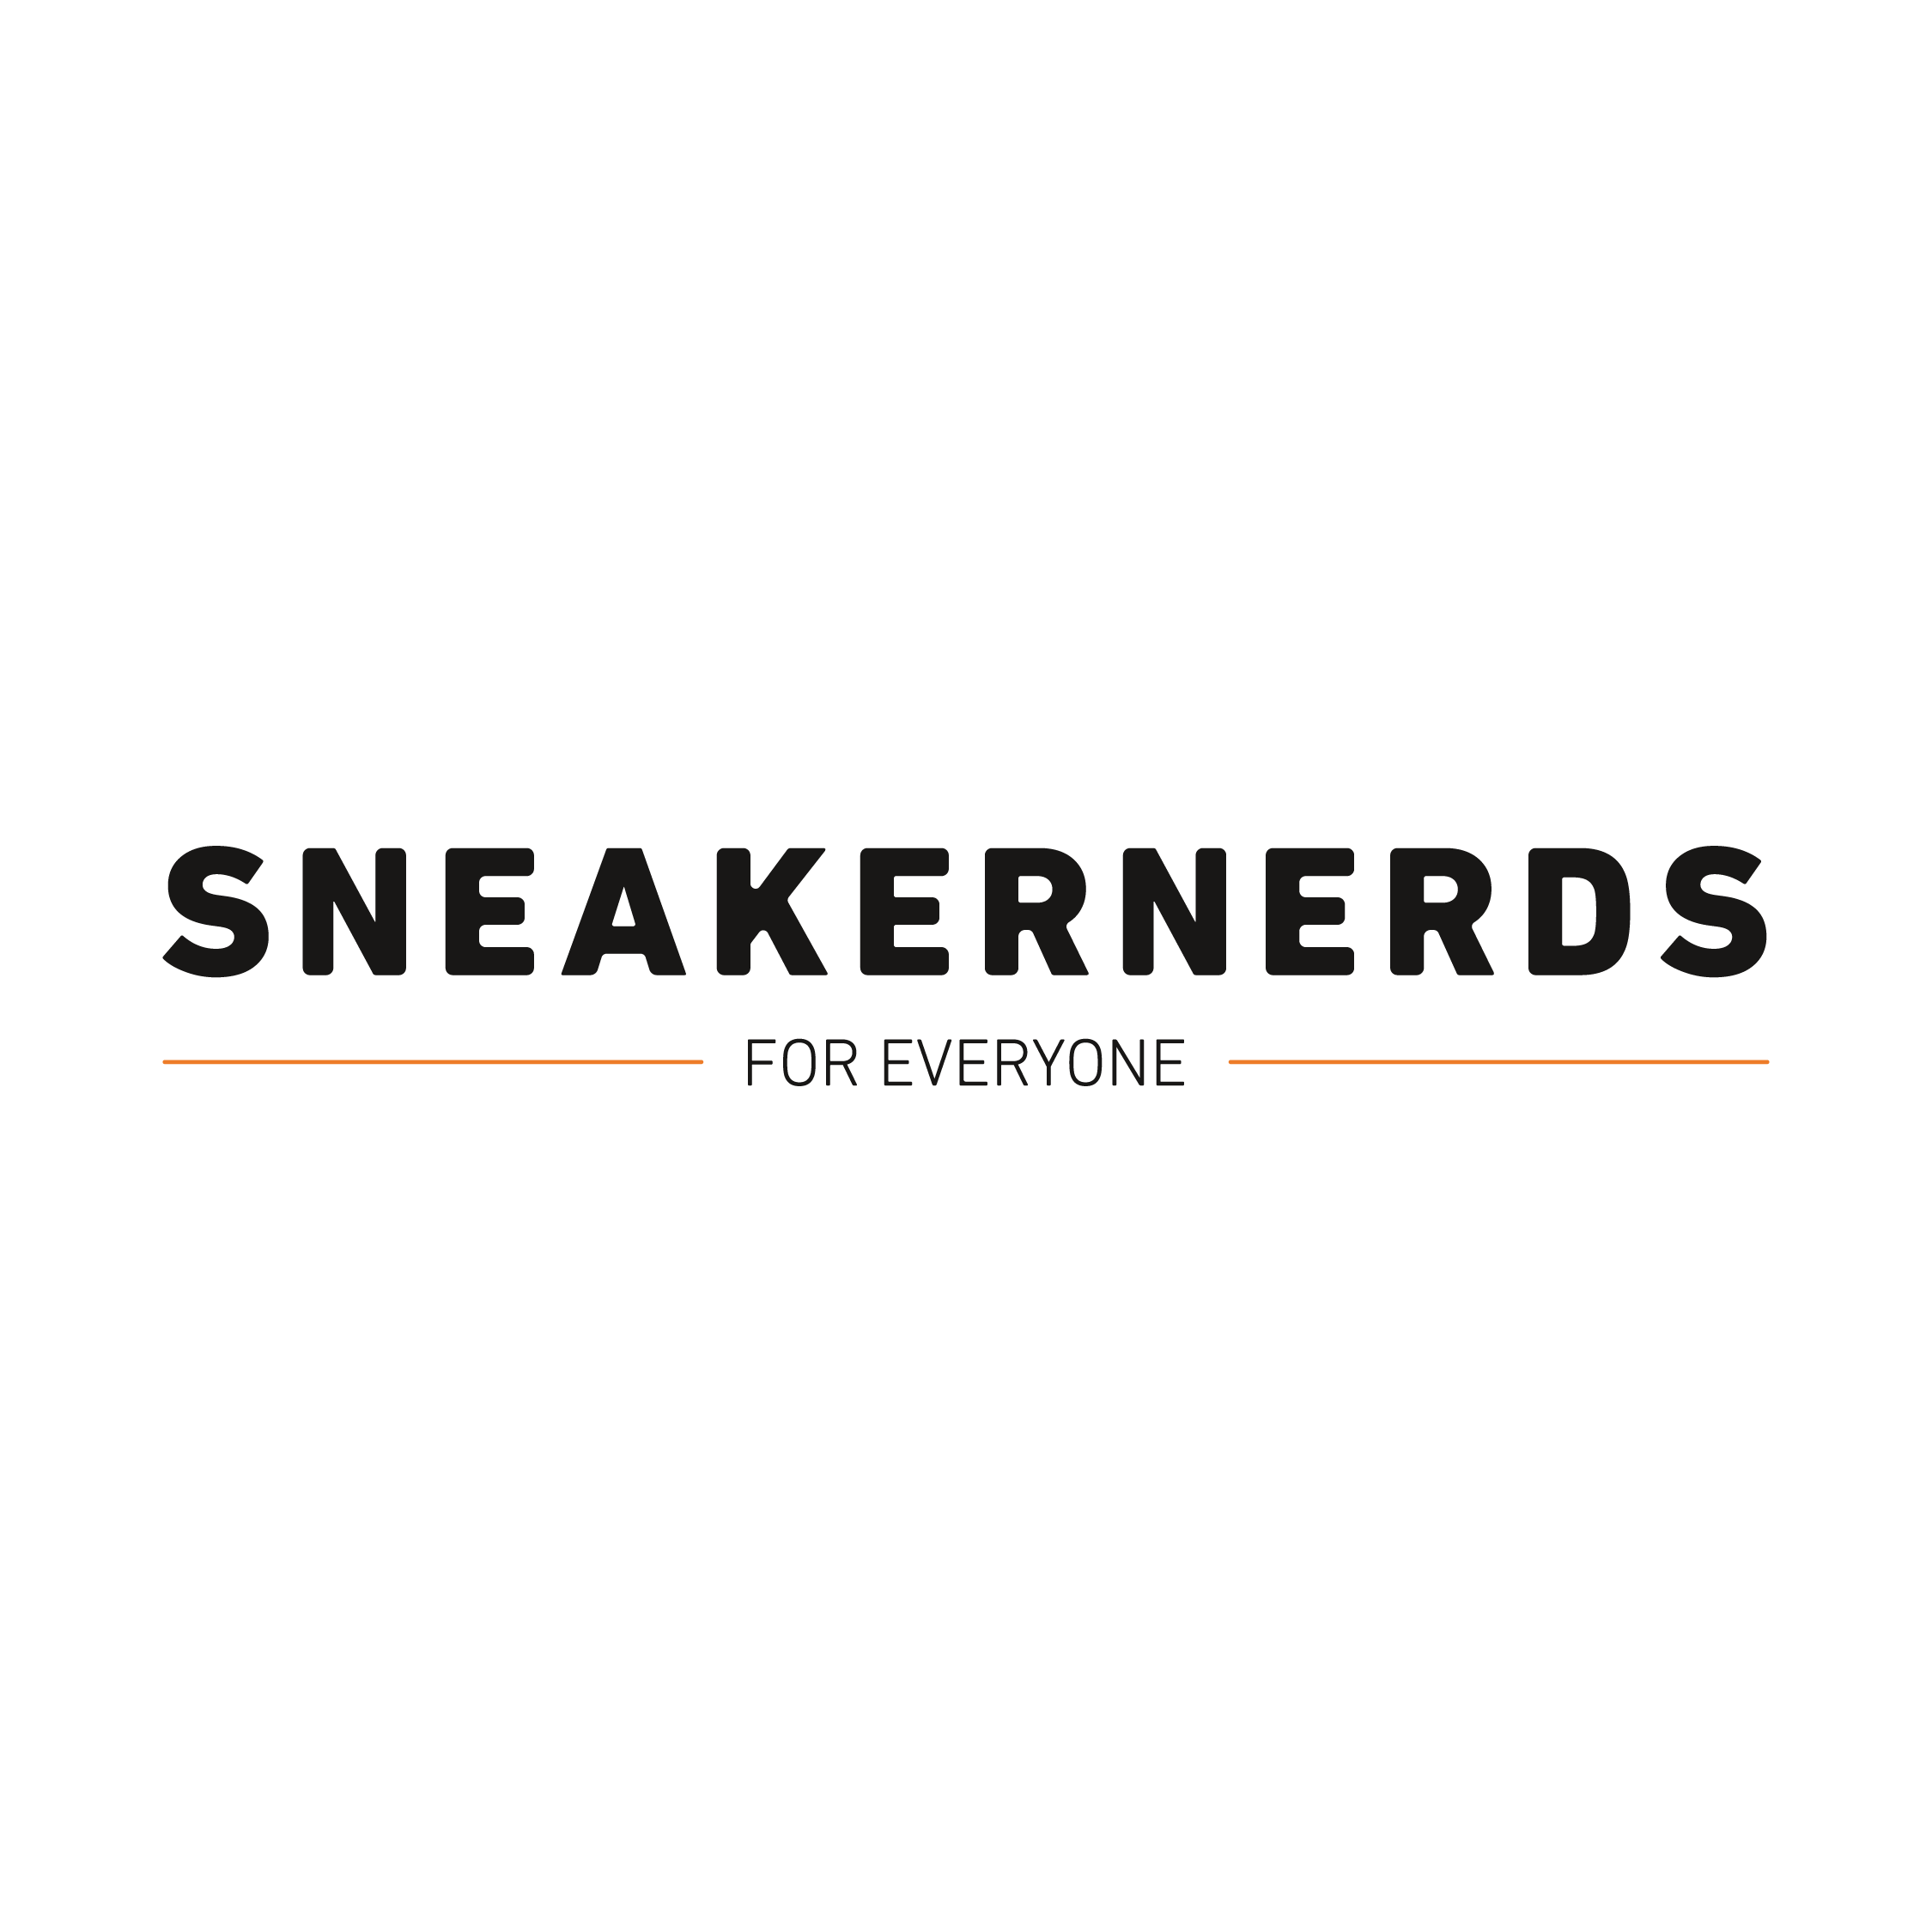 Sneakernerds logo